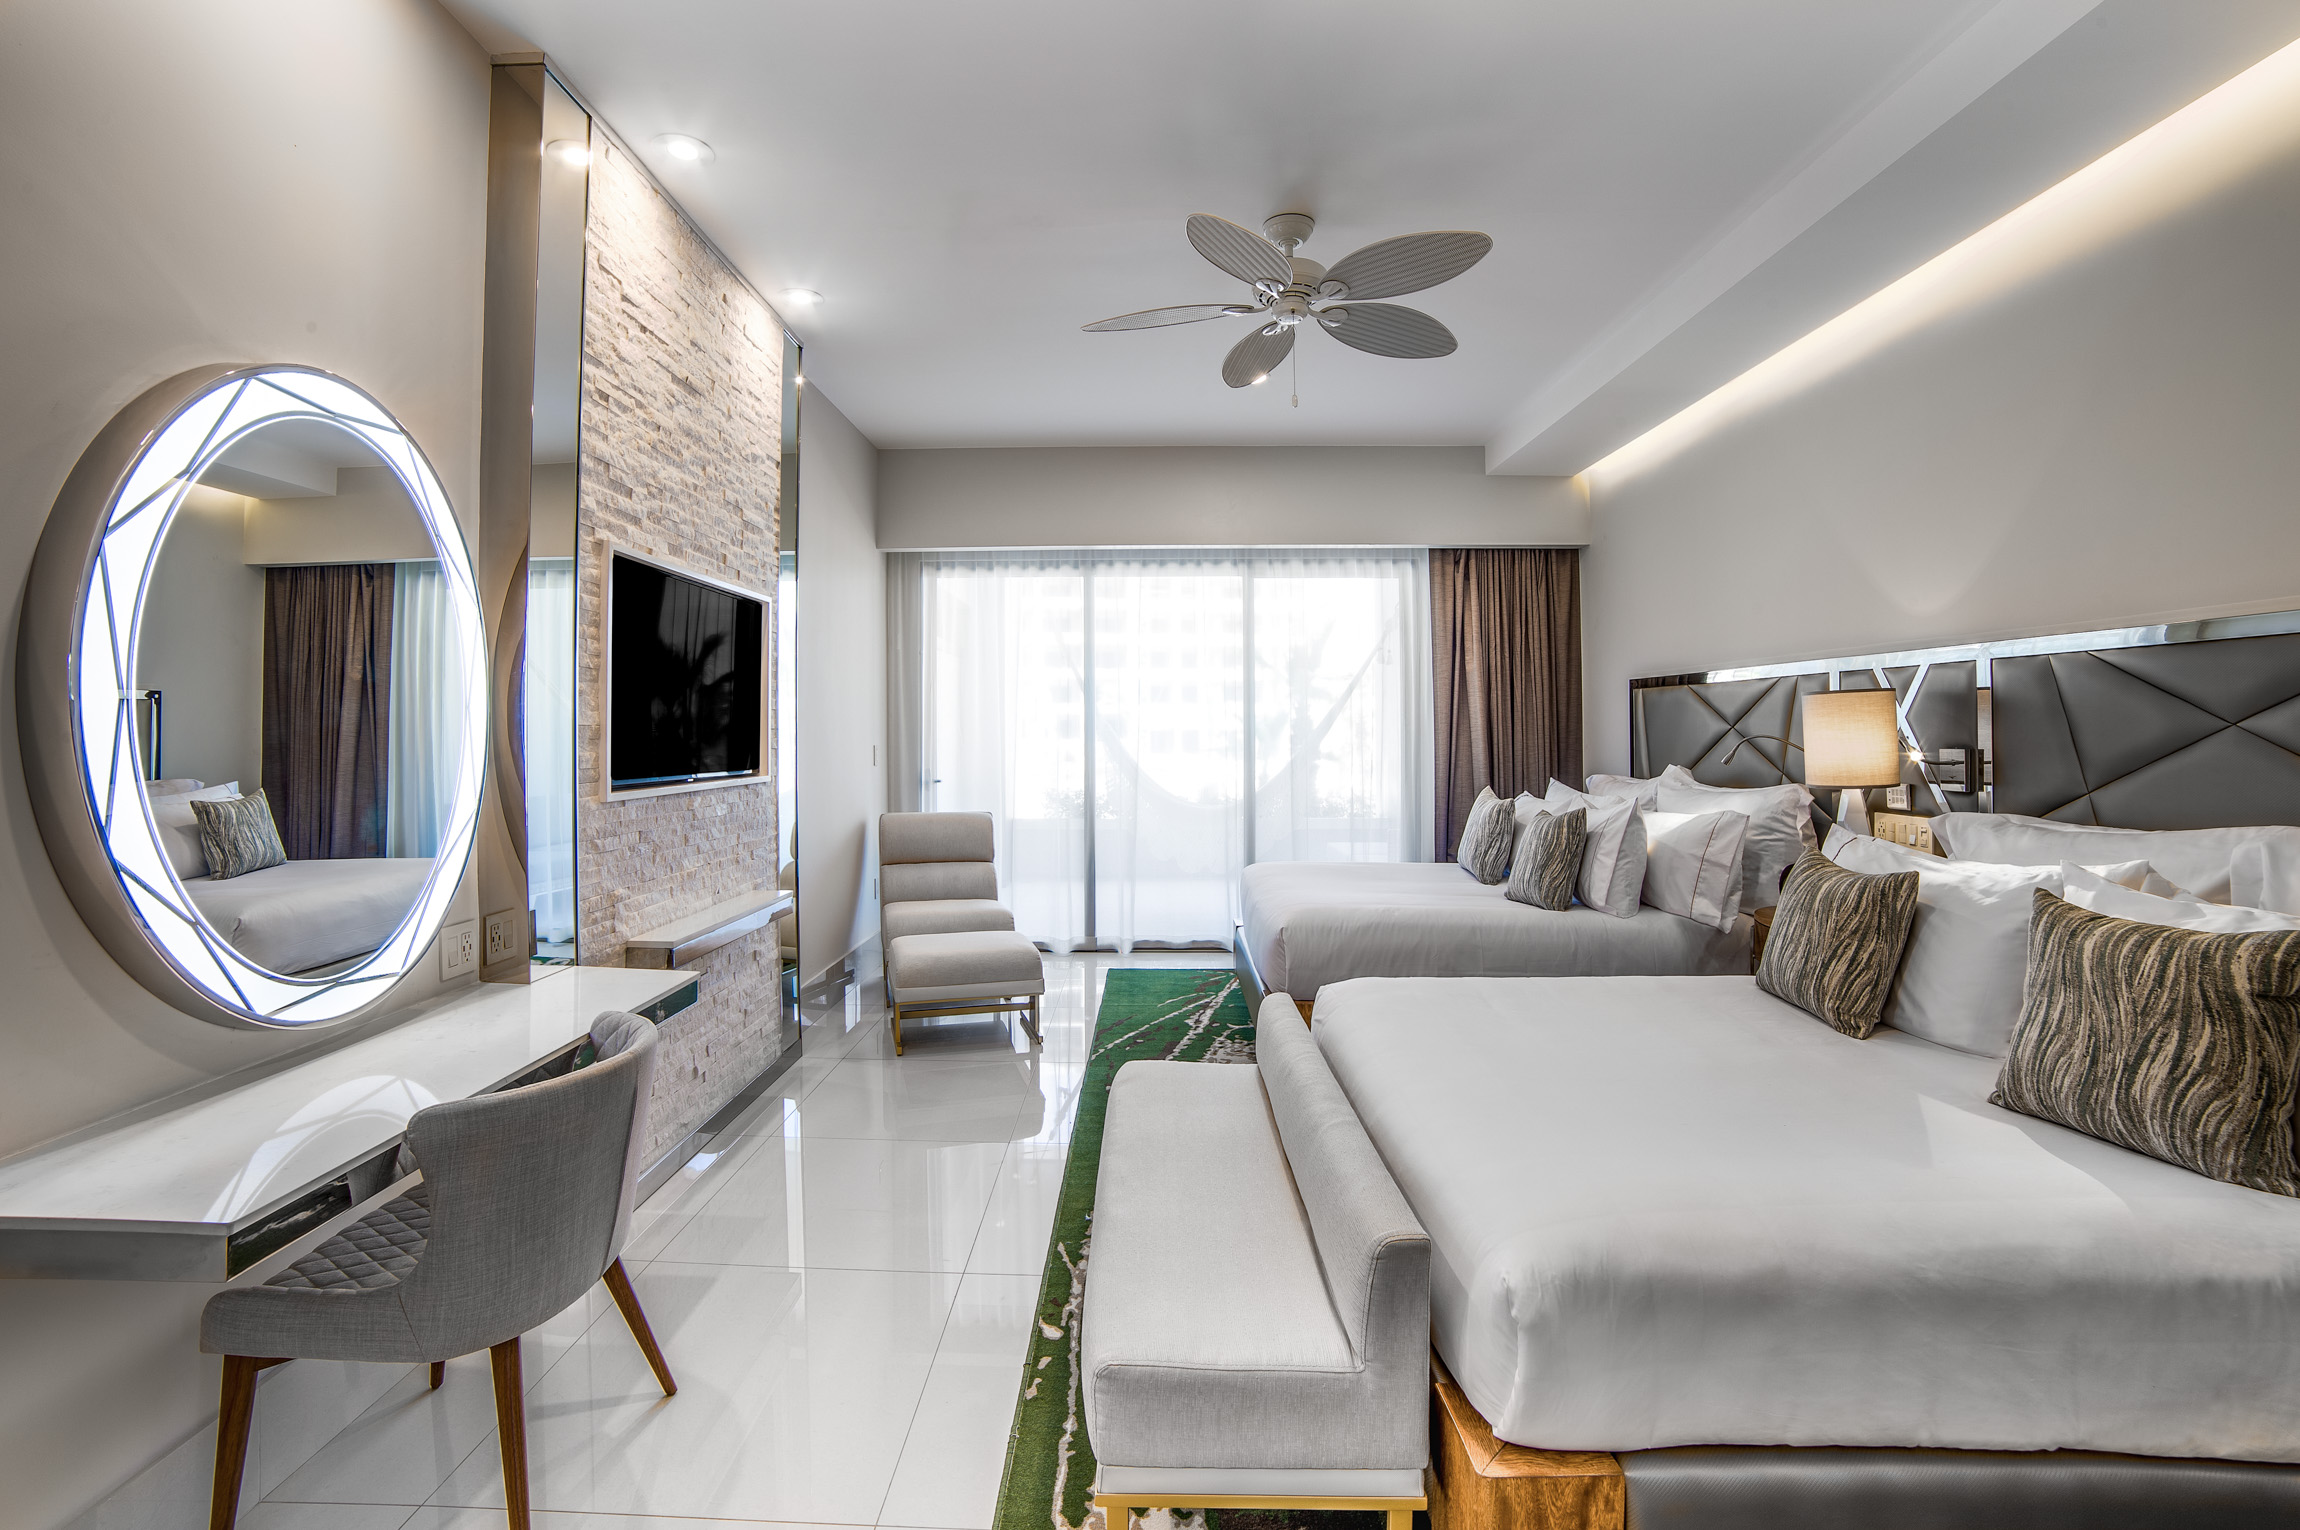 Radisson Resort & Suites 5* two Bedroom Suite with Terrace туалет. Garza Blanca Resort & Spa Cancun. Two bedroom suite